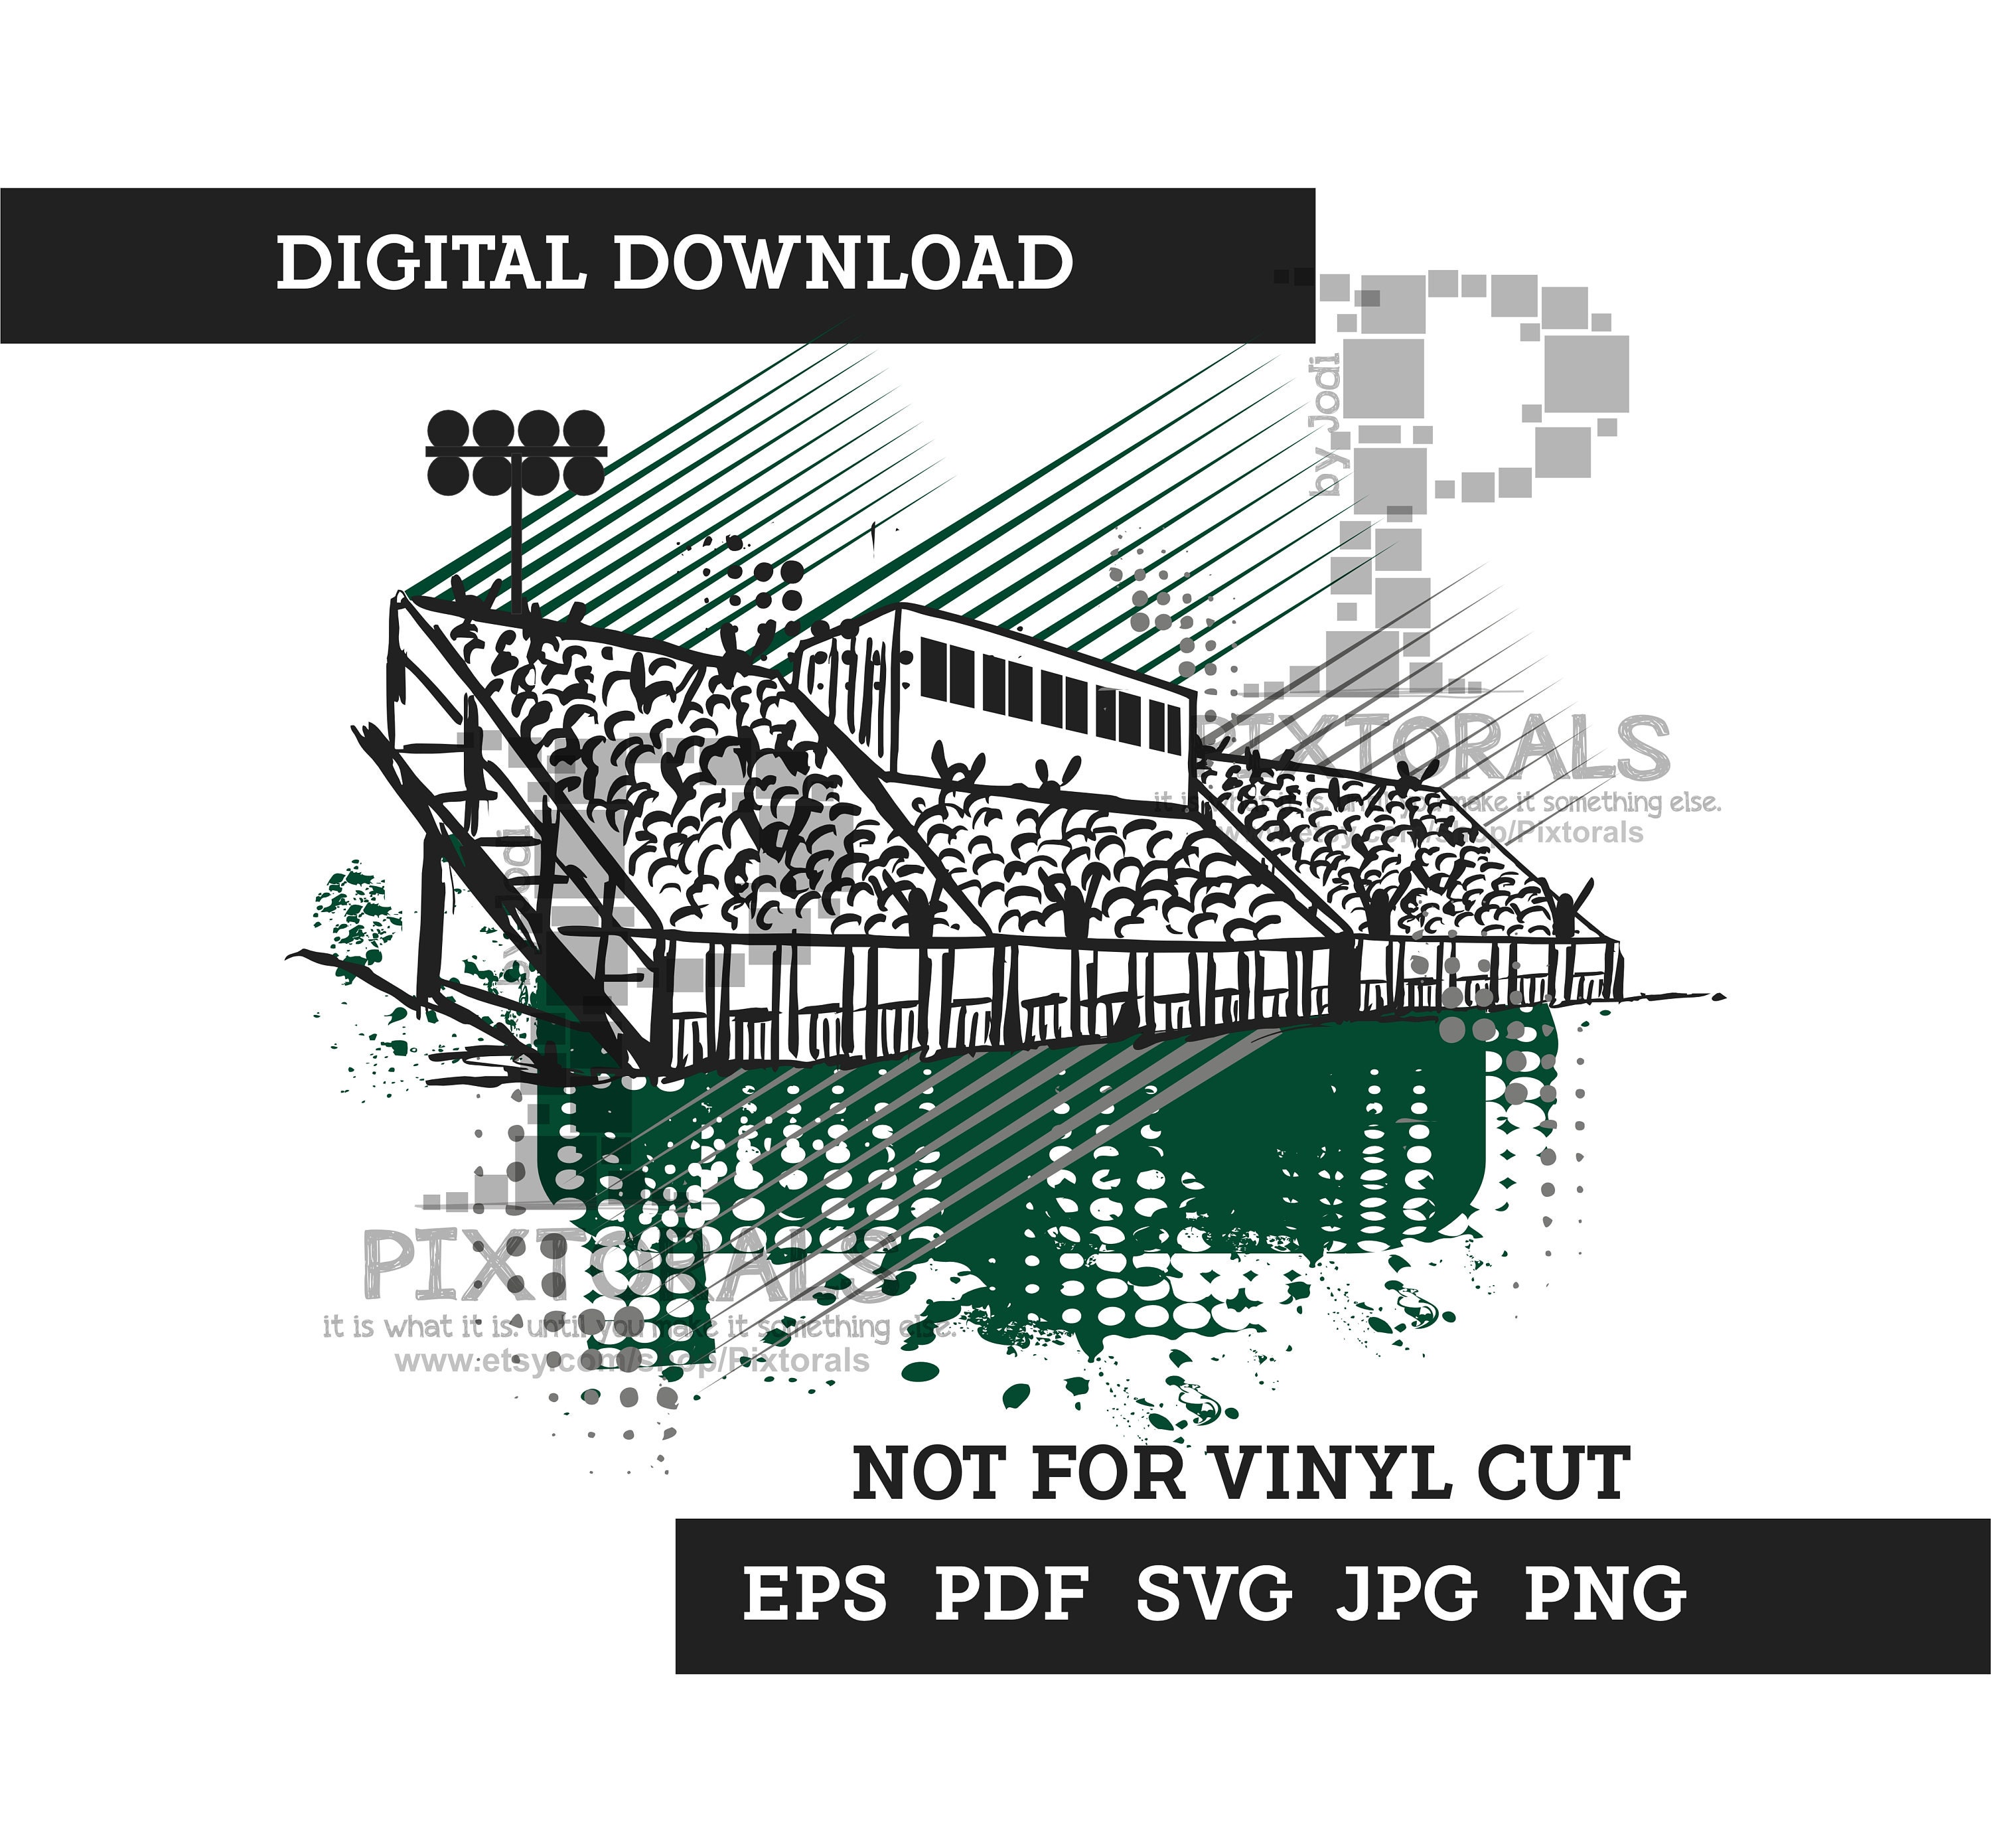 Free Football Game Background - Download in Illustrator, EPS, SVG, JPG, PNG